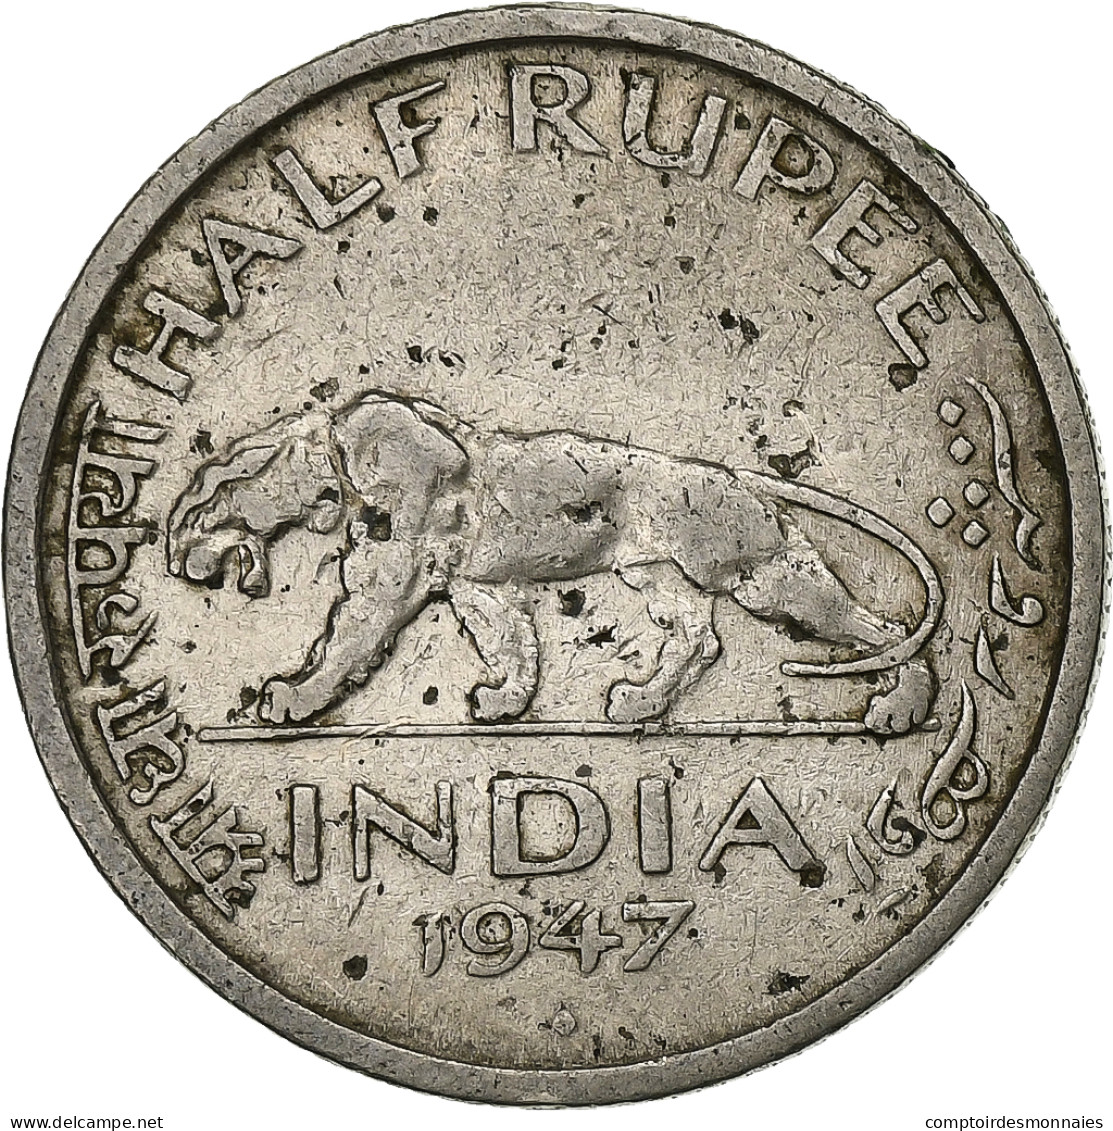 République D'Inde, 1/2 Rupee, 1947, Mumbai, Cupro-nickel, TTB+, KM:Pn5 - Inde